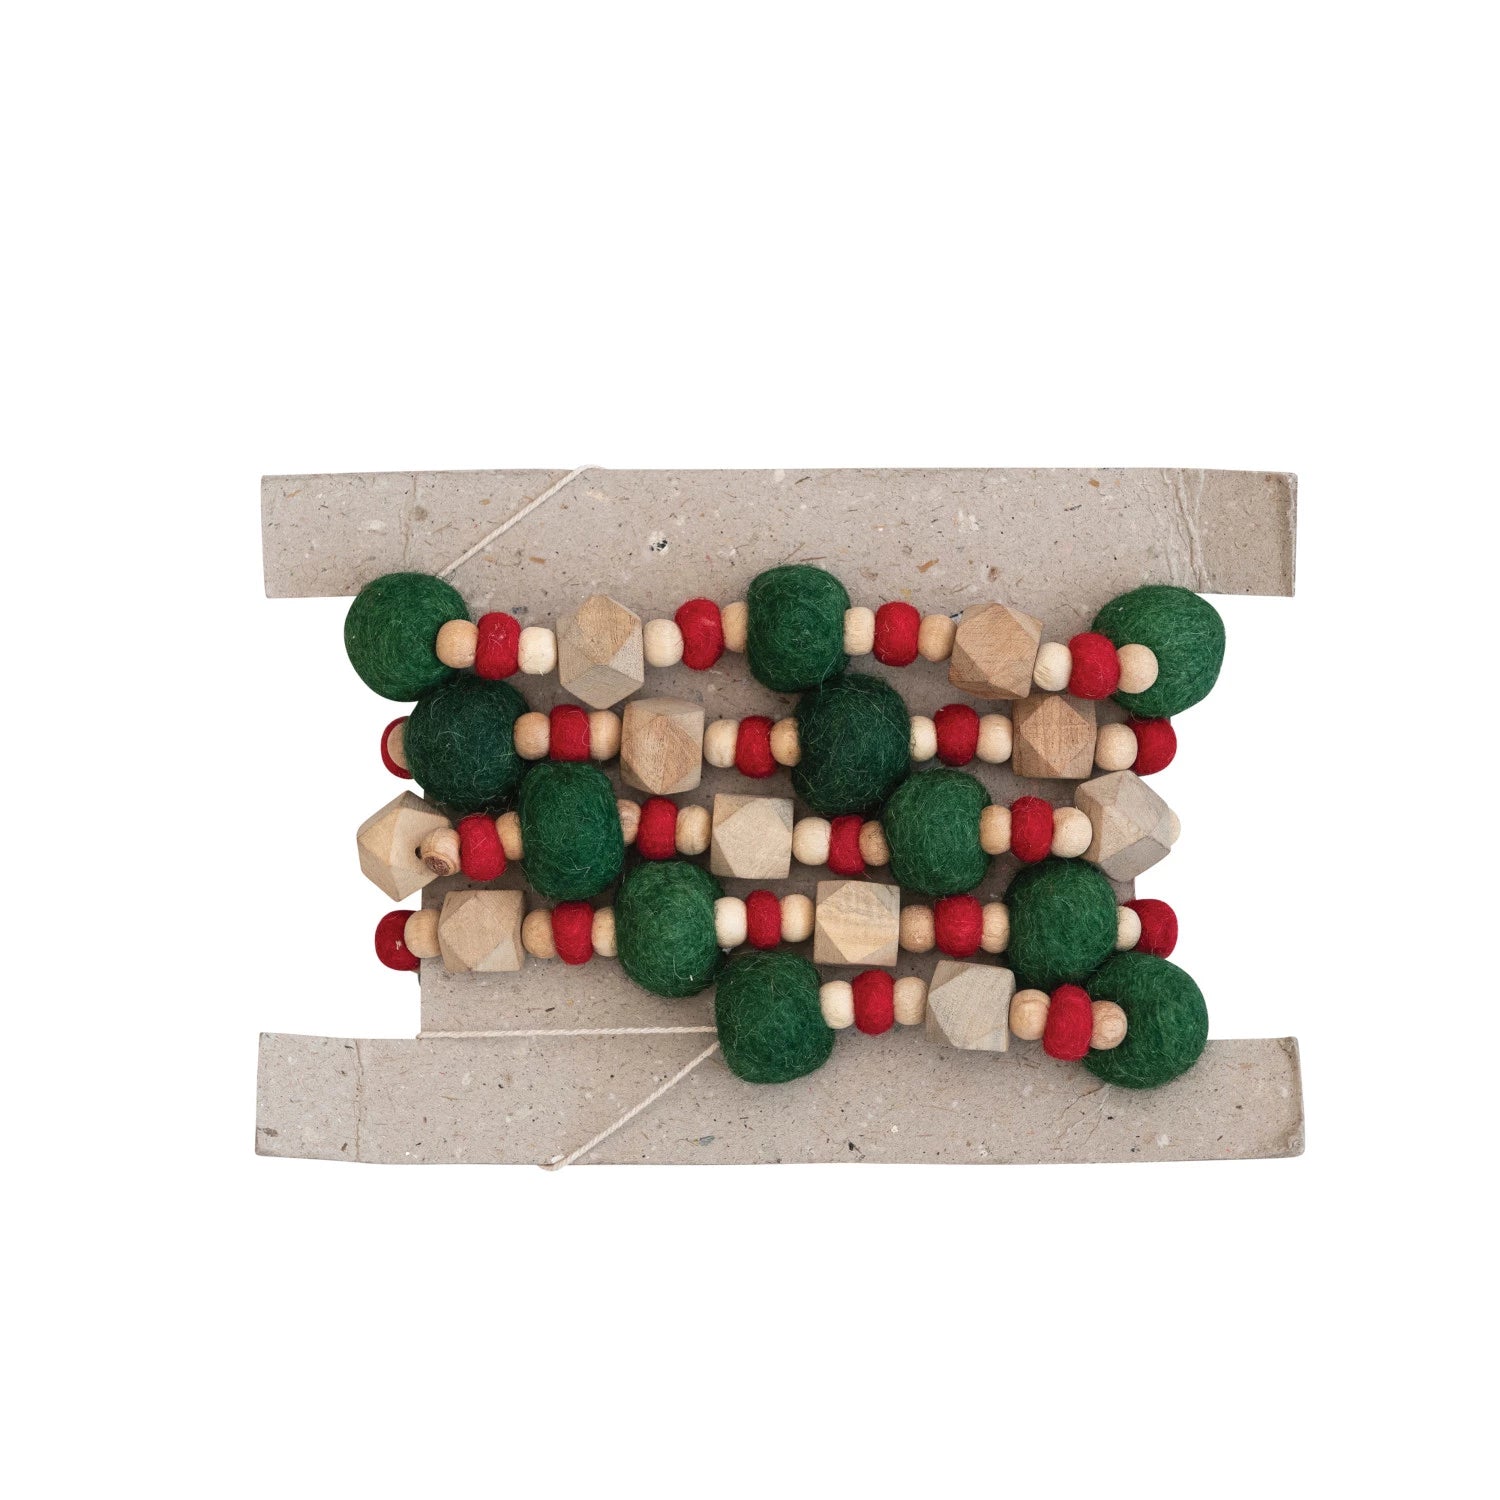 Handmade Wool Felt Ball Garland w/ Wood Beads, Red, Green & Cream Color - 72"